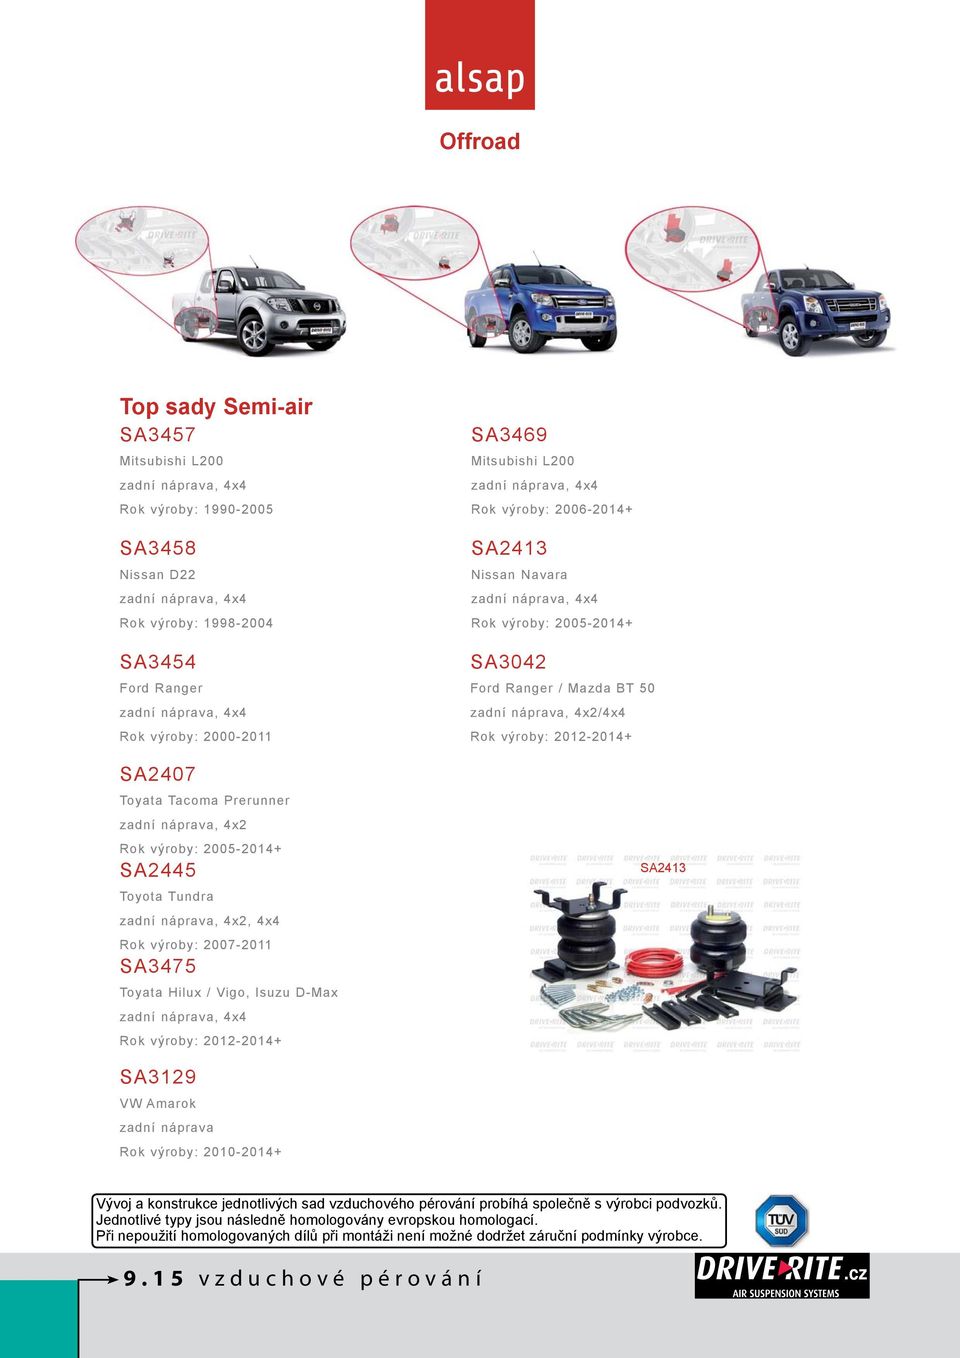 náprava, 4x4 Rok výroby: 2012-2014+ SA3469 Mitsubishi L200 zadní náprava, 4x4 Rok výroby: 2006-2014+ SA2413 Nissan Navara zadní náprava, 4x4 Rok výroby: 2005-2014+ SA3042 Ford Ranger / Mazda BT 50